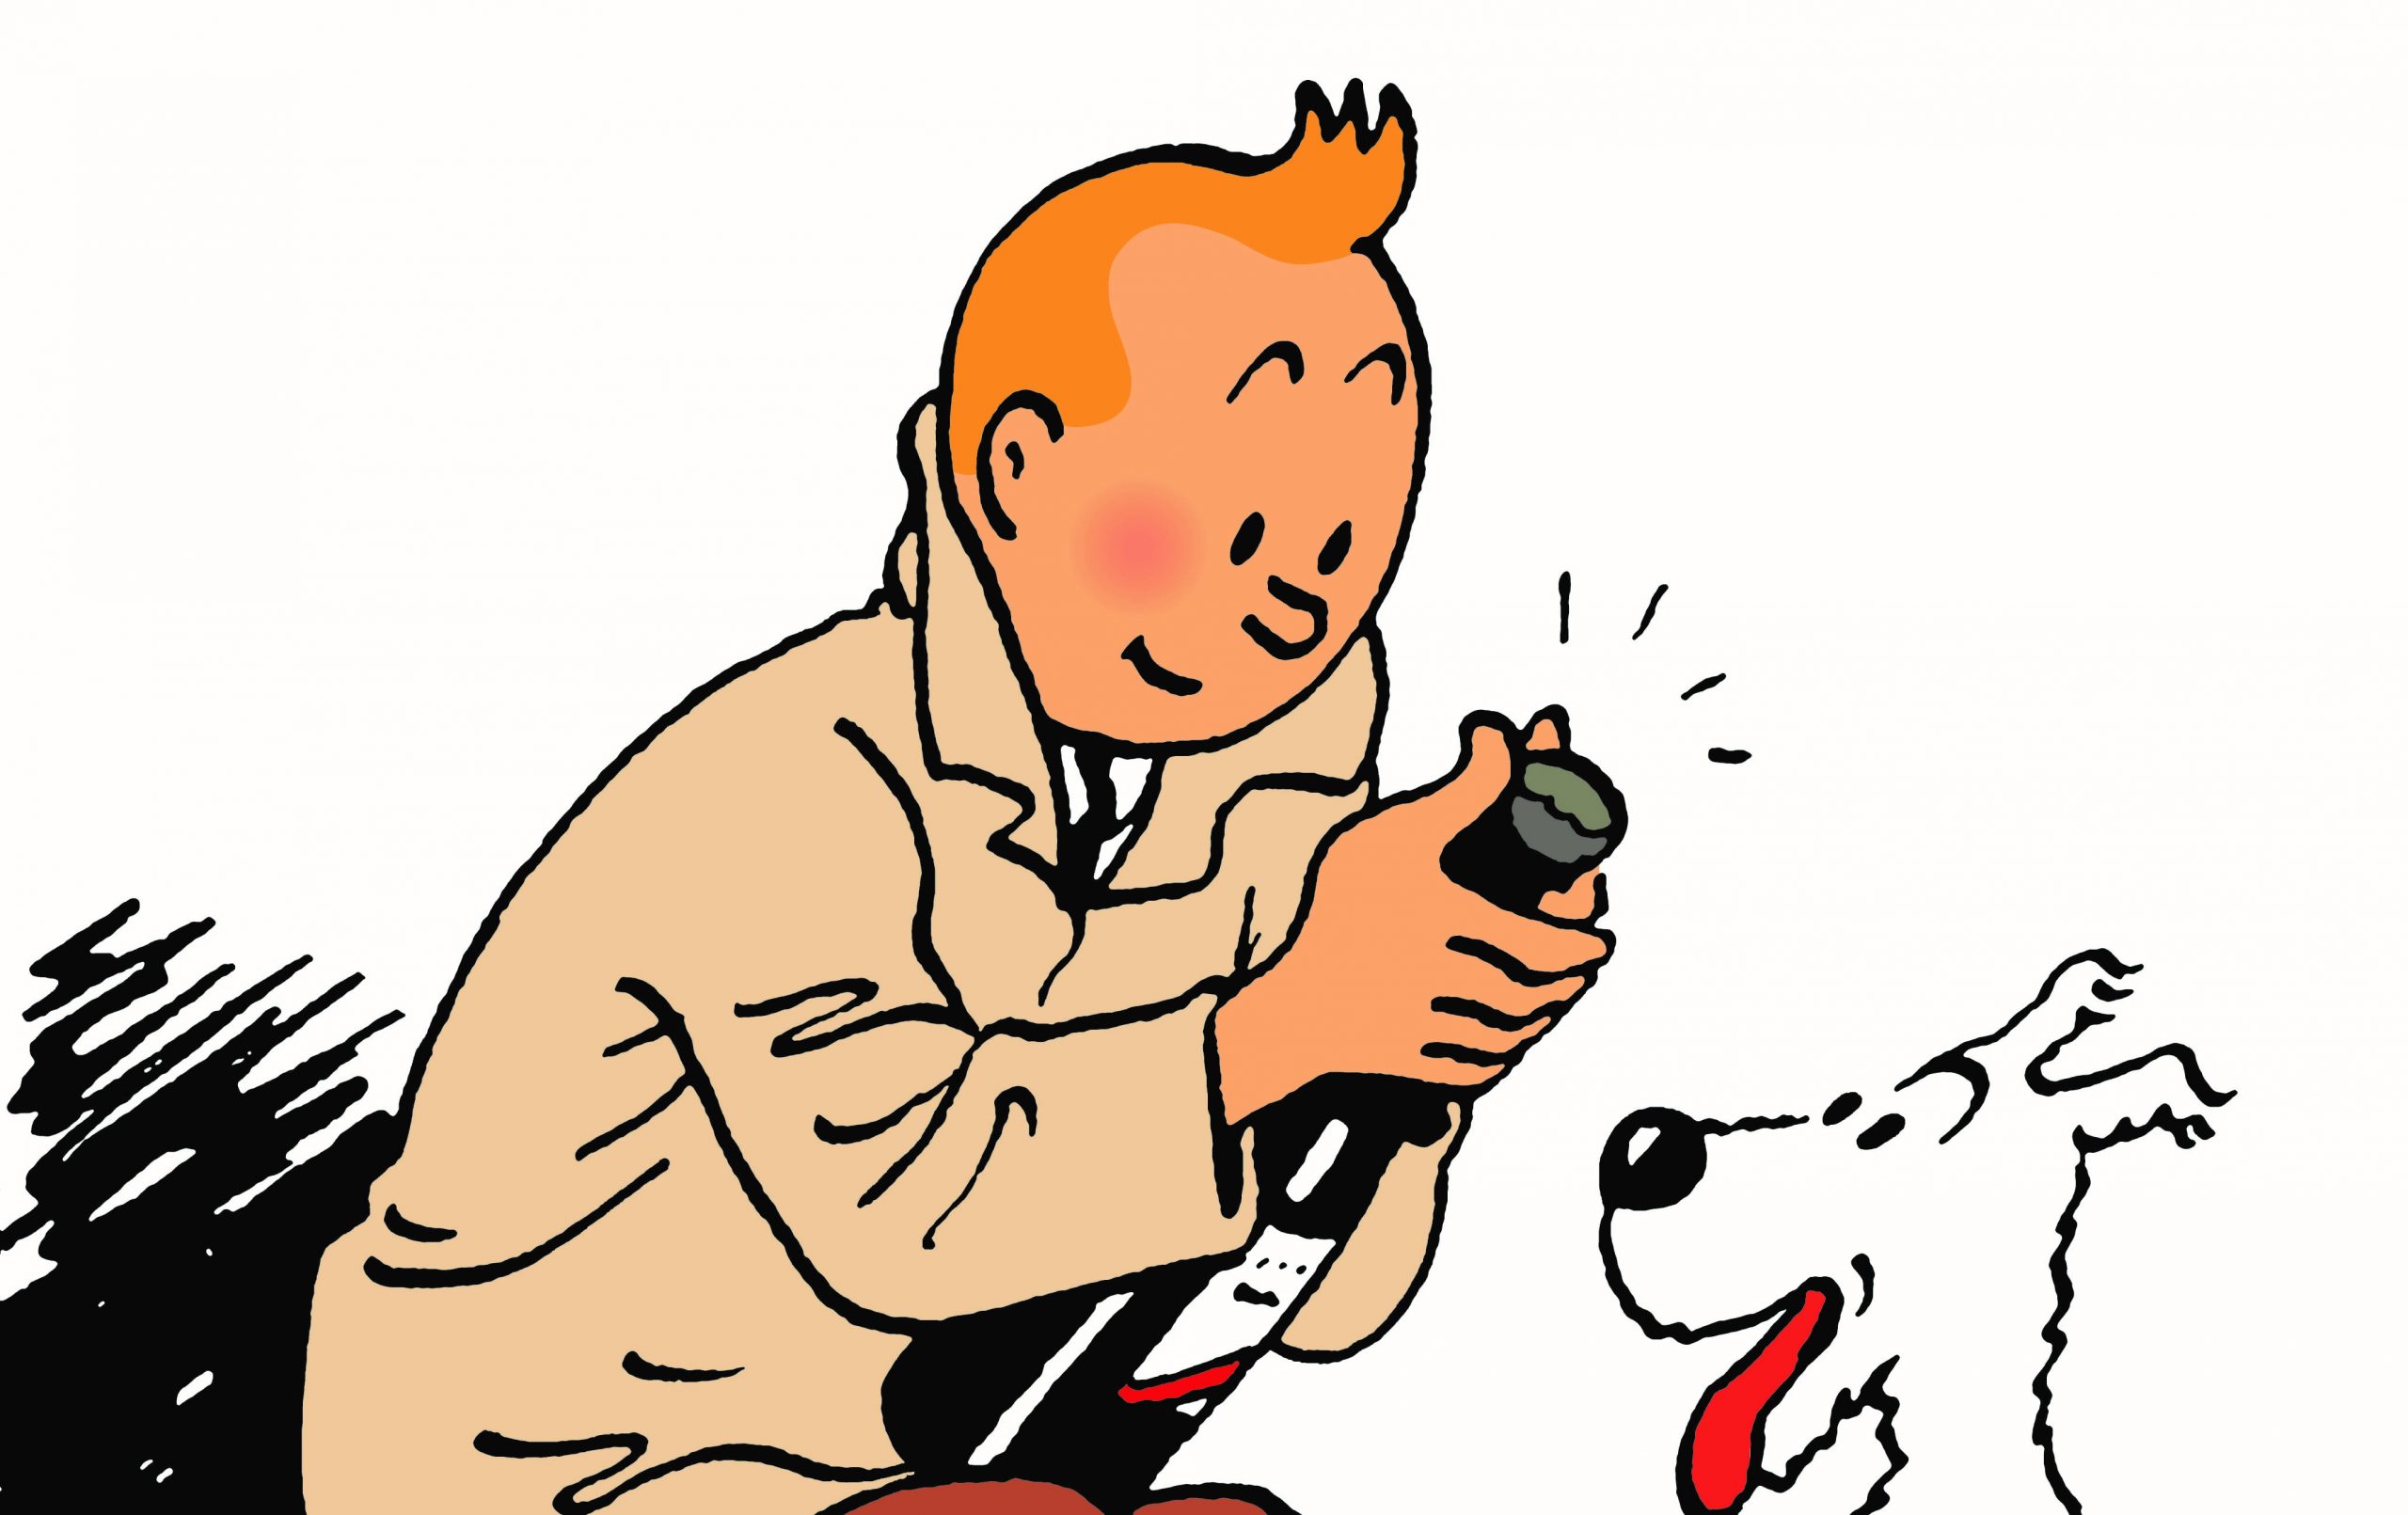 Joyeux Anniversaire Tintin Collections Delcampe Blog